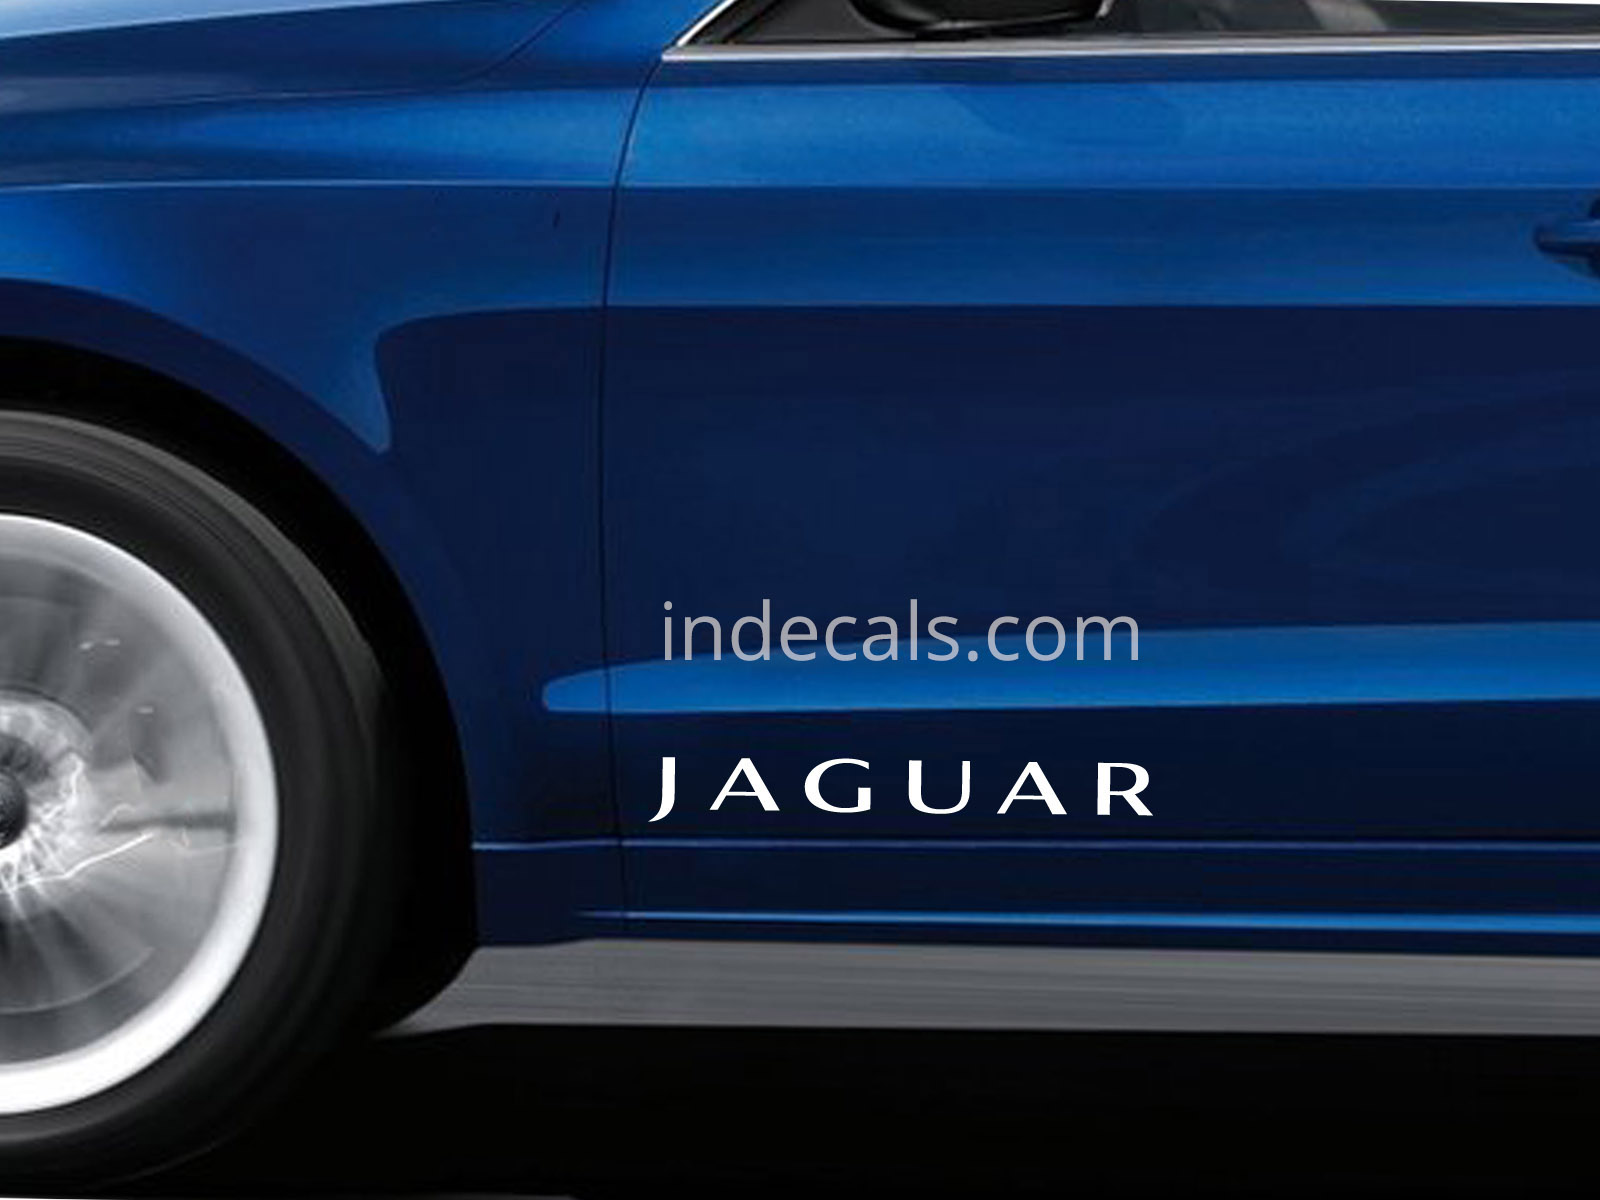 2 x Jaguar Stickers for Doors Large - White